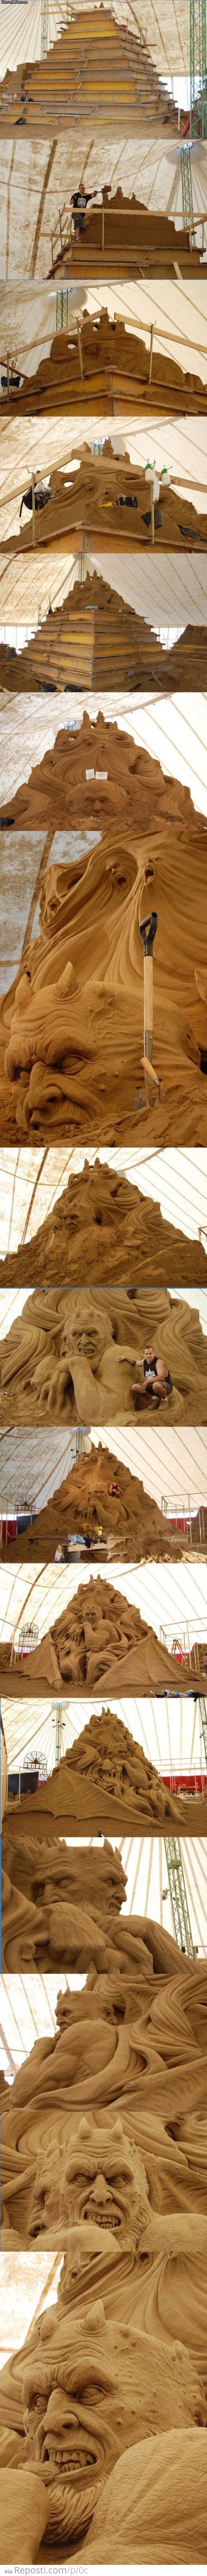 Dante's Satan Sand Sculpture